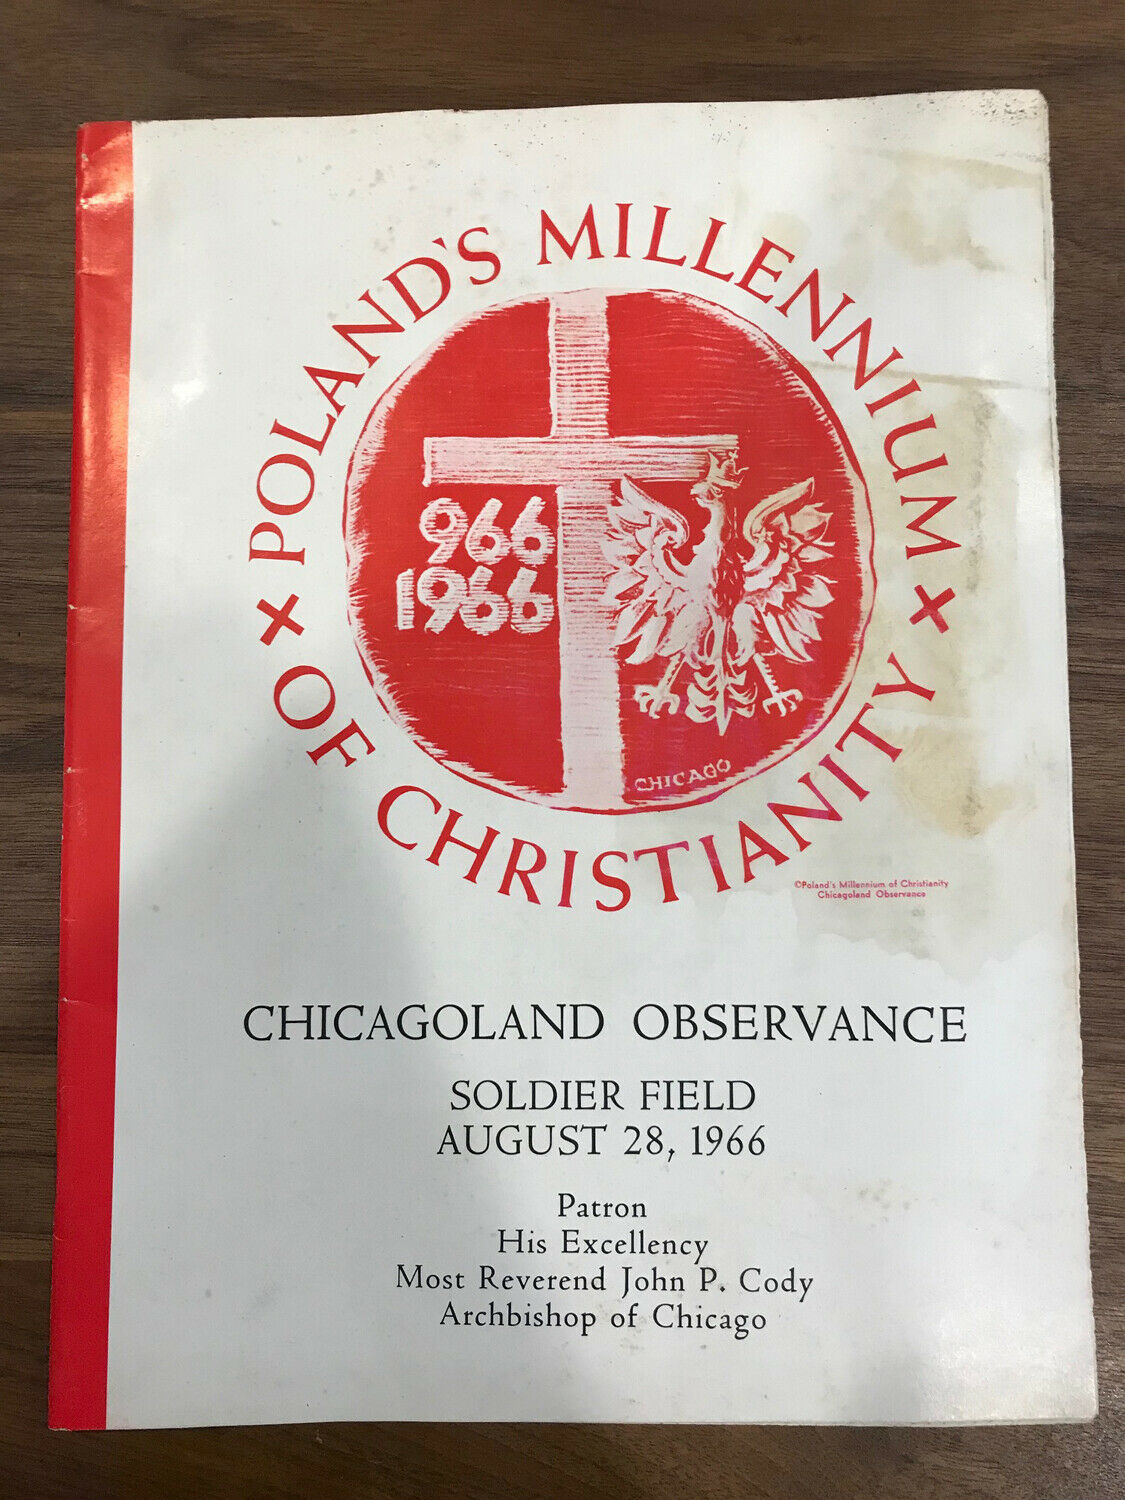 Poland's Millennium Of Christianity Chicago Observance Program - 1966